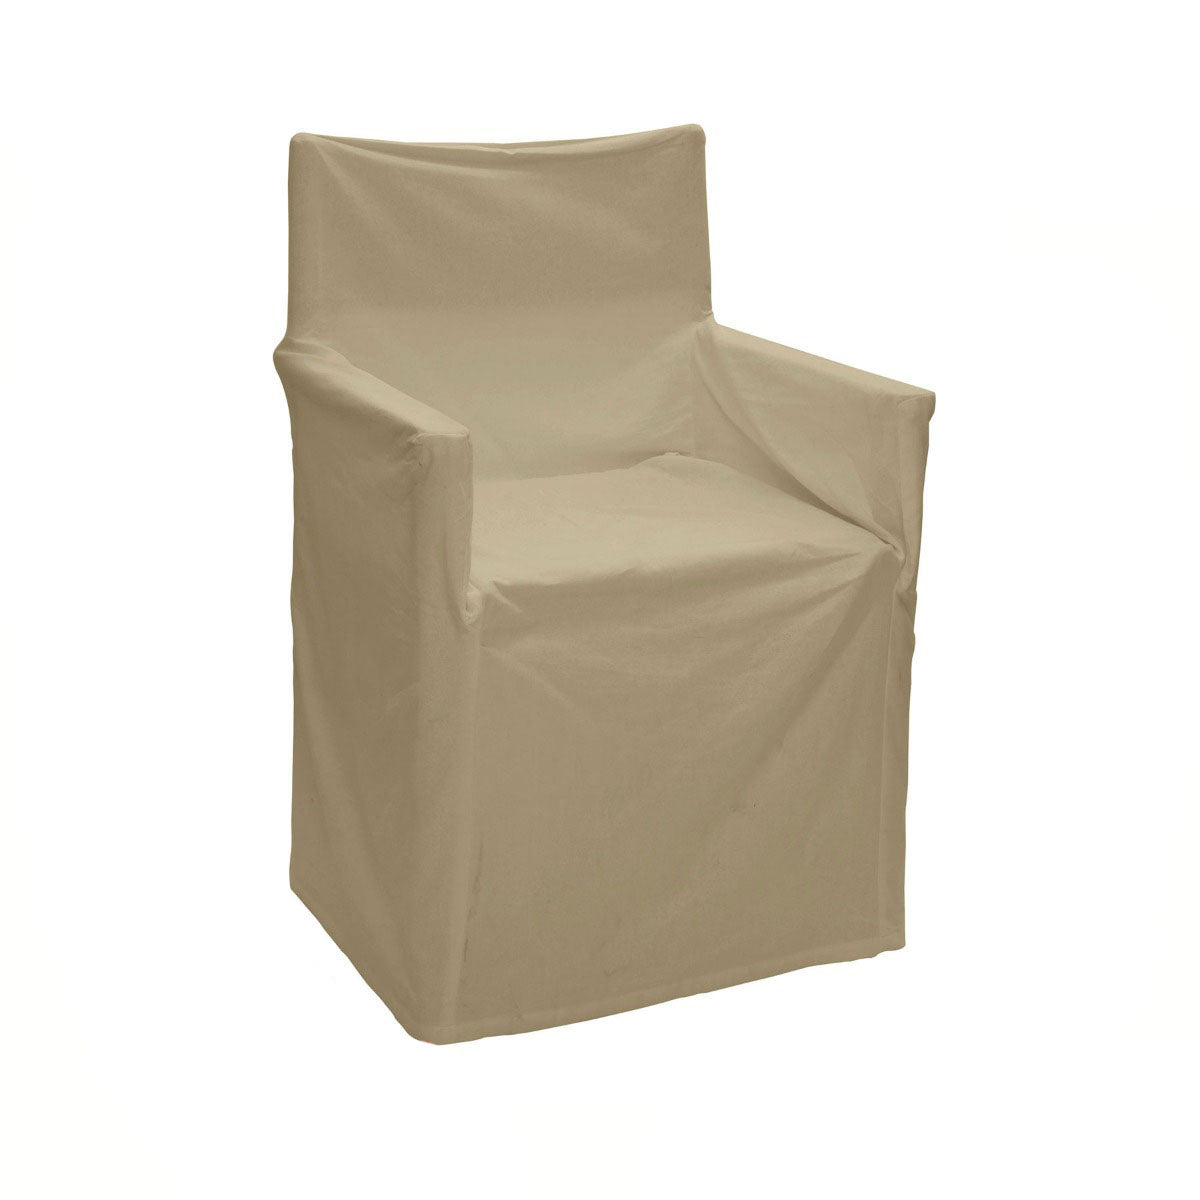 Rans Alfresco 100% Cotton Director Chair Cover - Plain Taupe